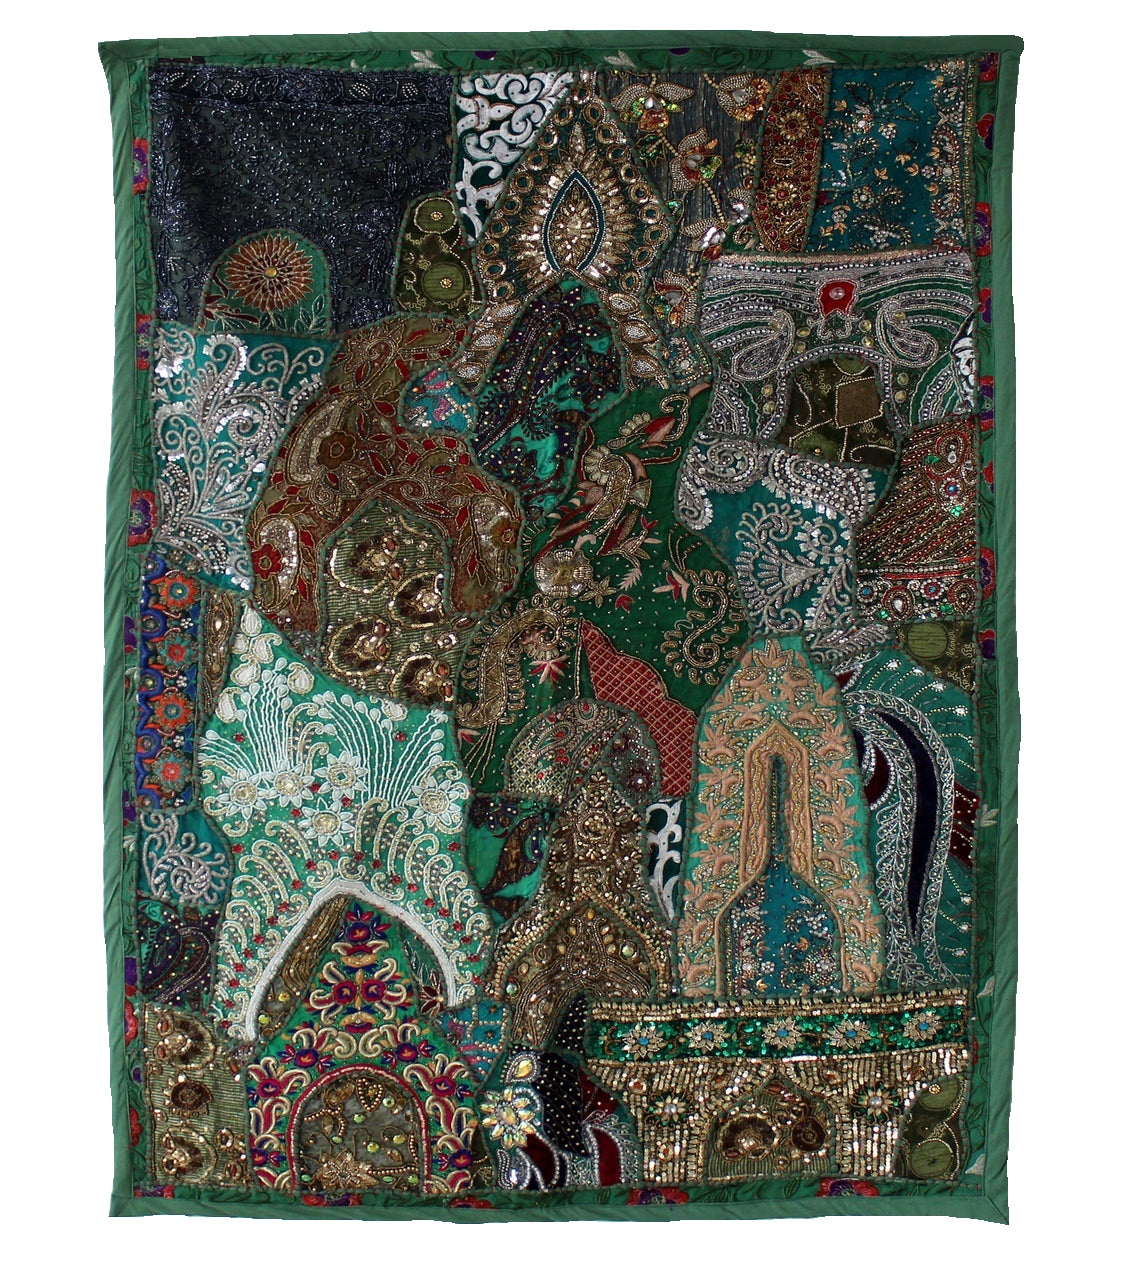 Bhawana Handicrafts Ethnic Patchwork Tapestry Wall Hanging Beaded Embroidery Runner Throw Decorative Handmade Ethnic Art 40x40 inch 